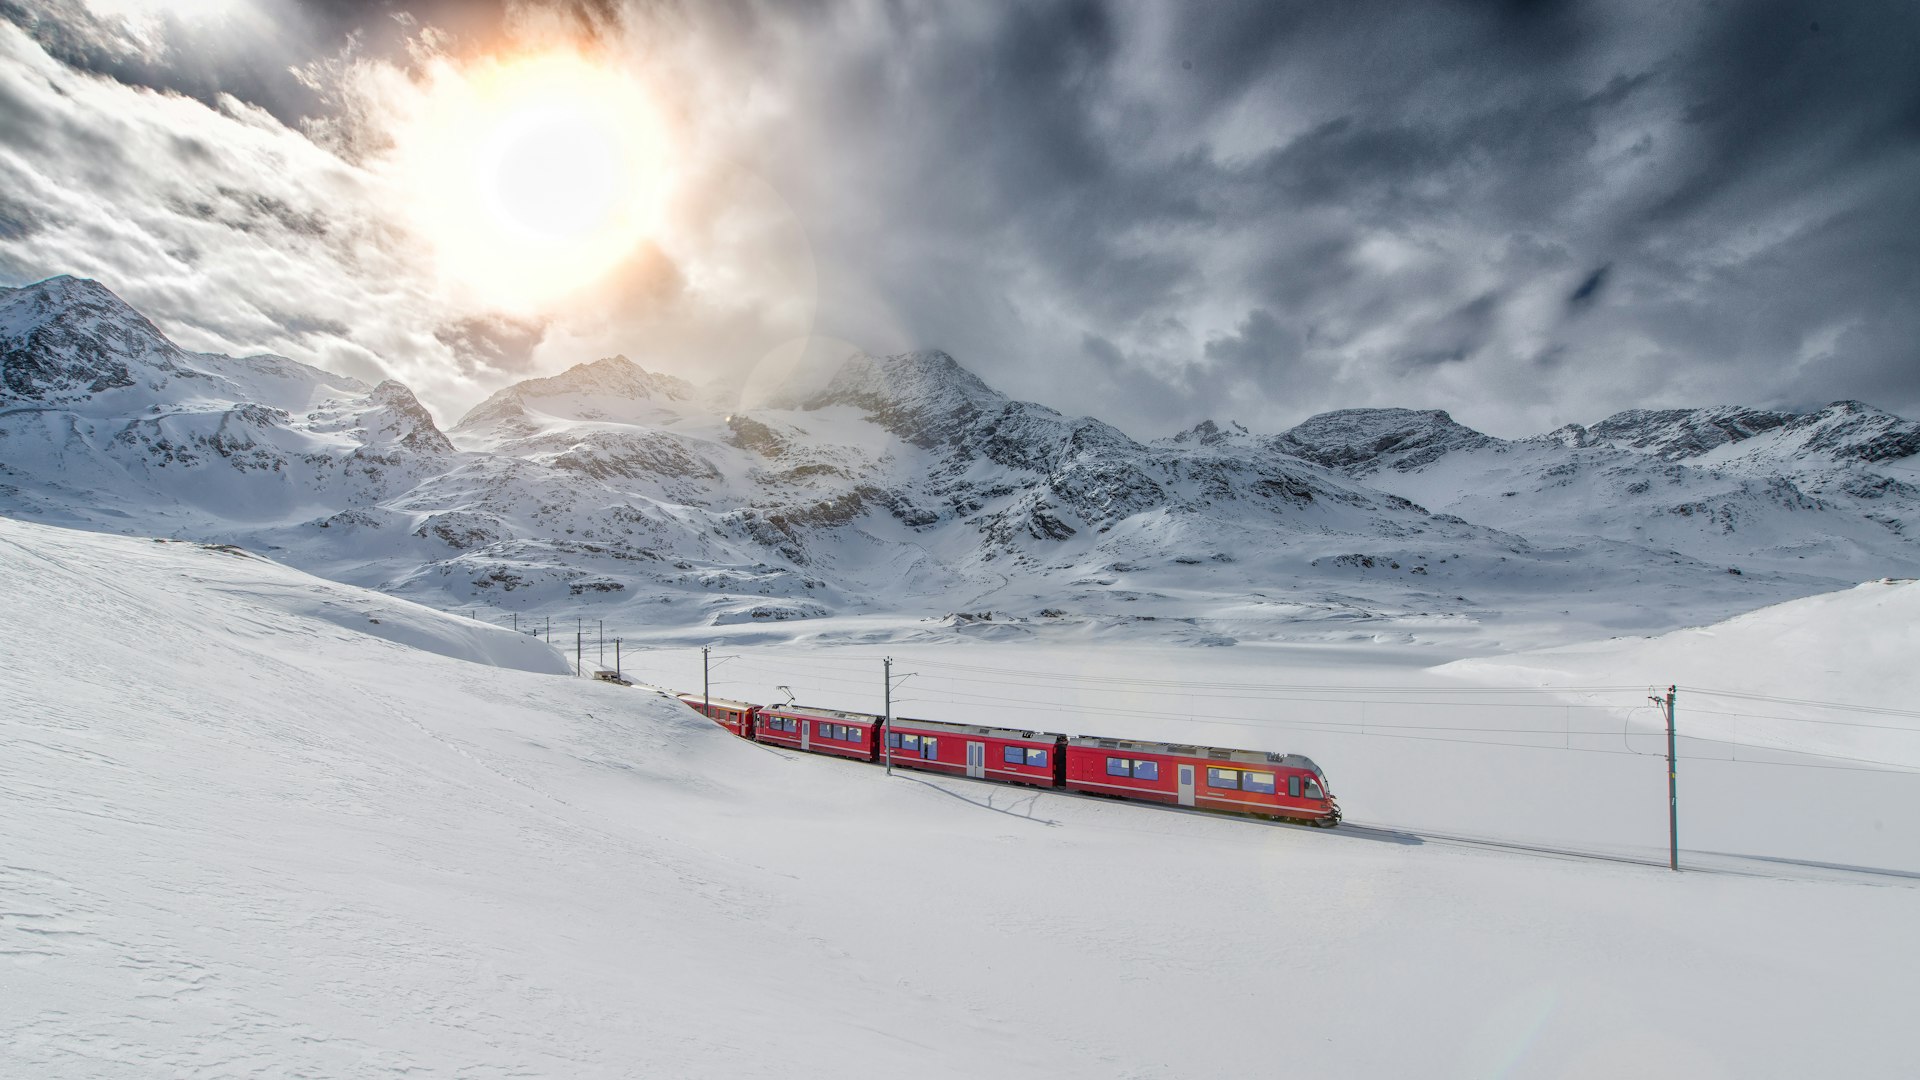 Bernina Express train passing through a snow-covered mountain range.